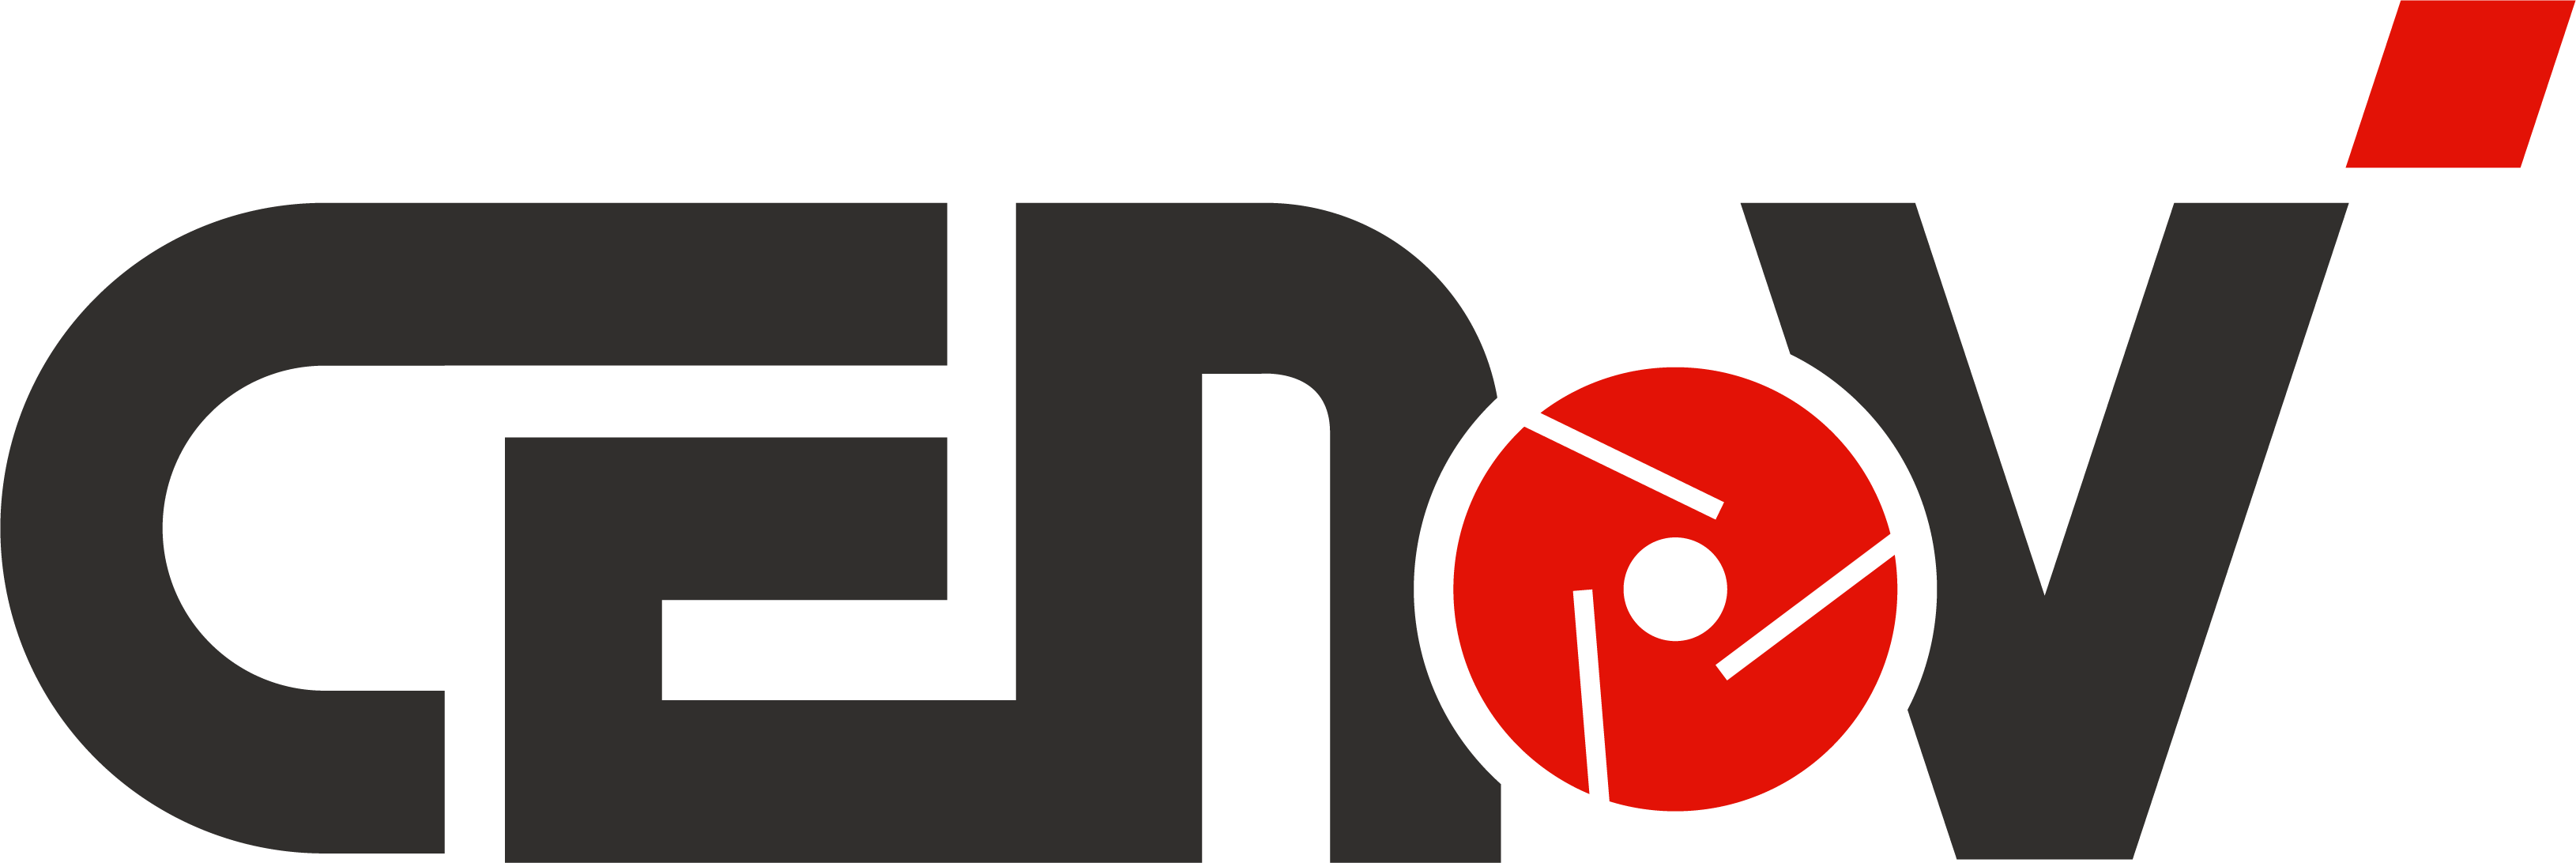 Logo cenov.distribution - officiel